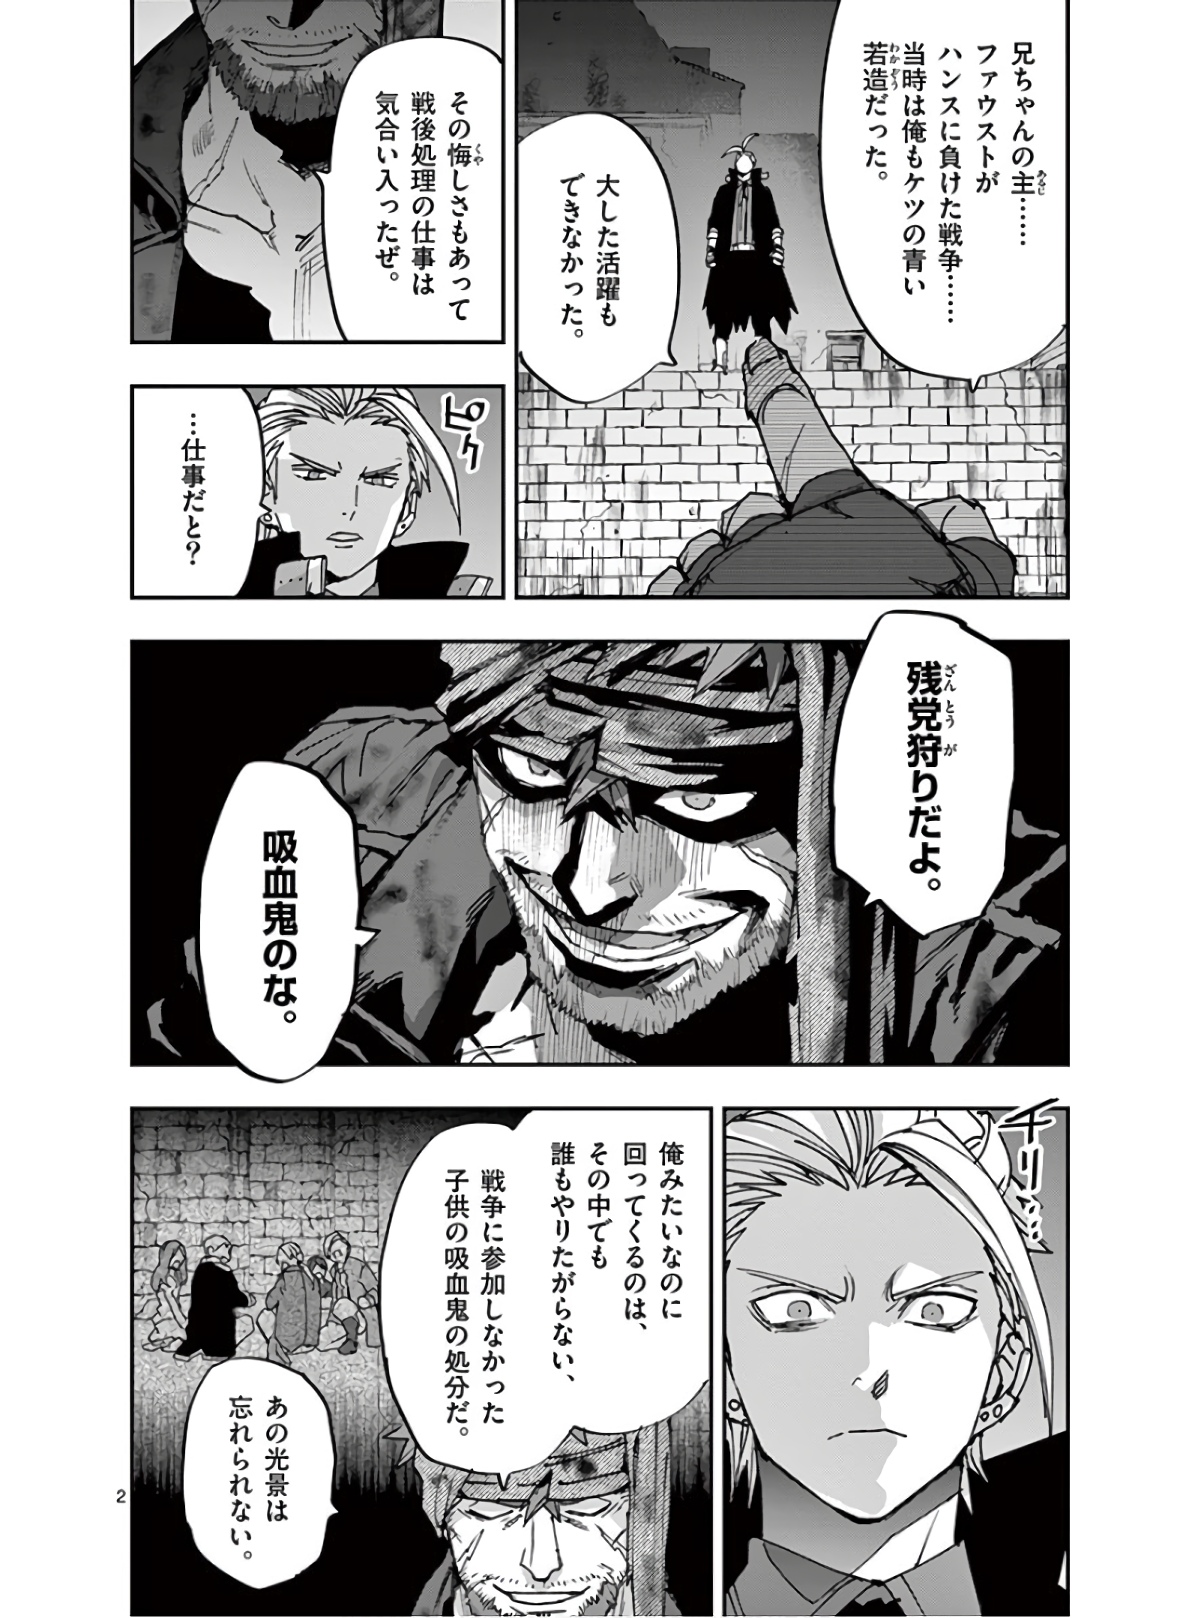 Ginrou Bloodborne - Chapter 115 - Page 2